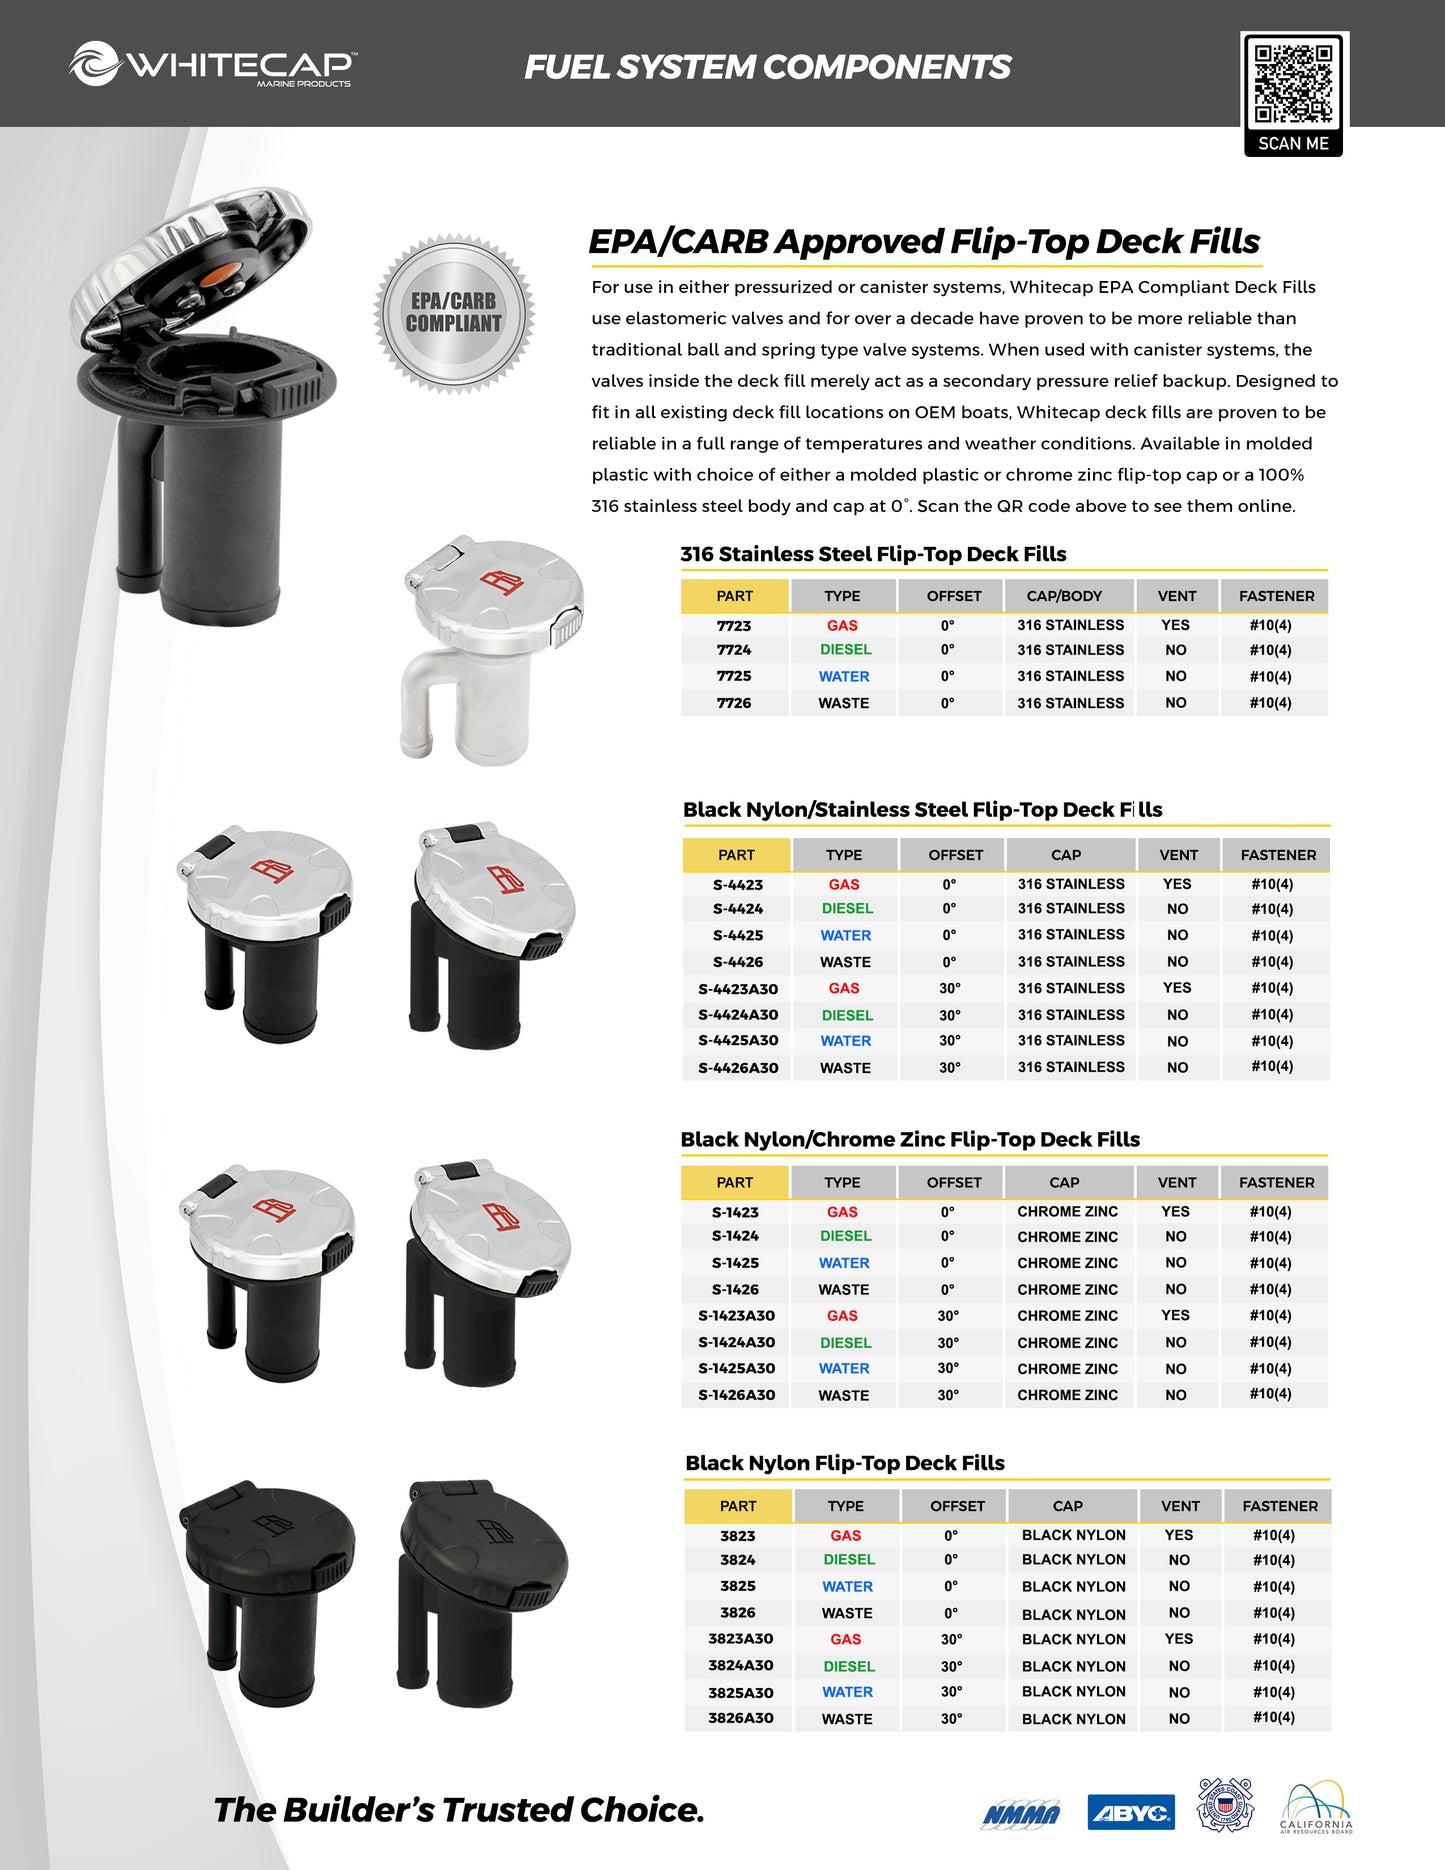 EPA/CARB Flip Top Pressurized Deck Fill - Diesel